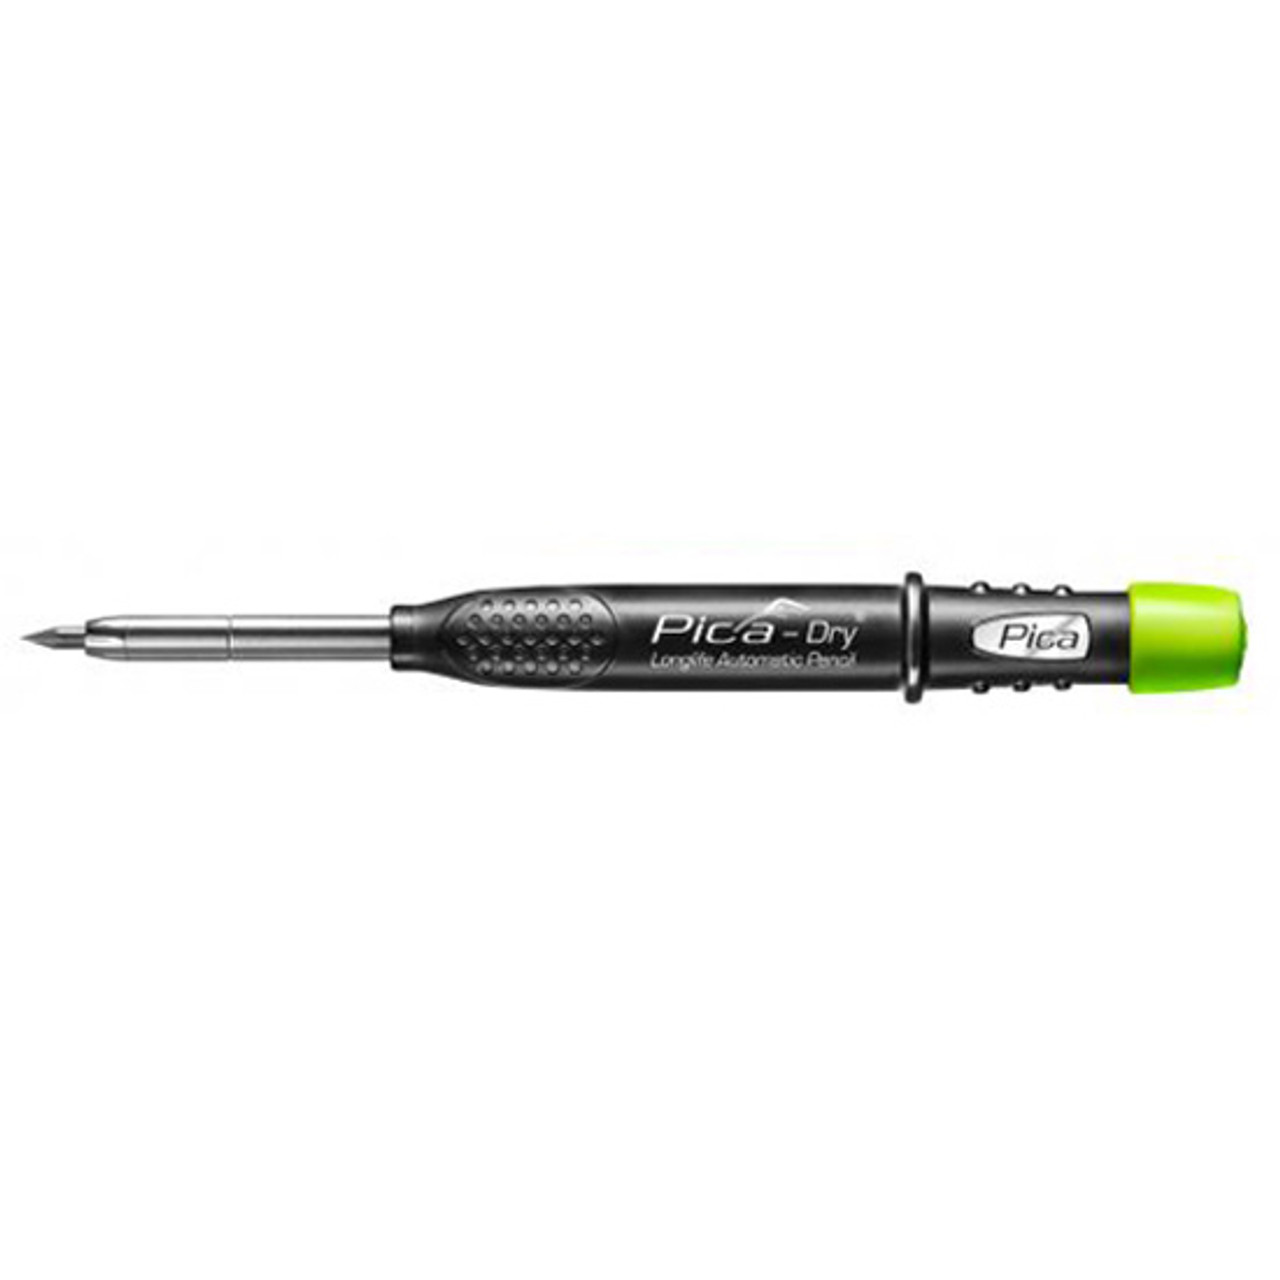 Pica Dry SB Automatic Pencil Green